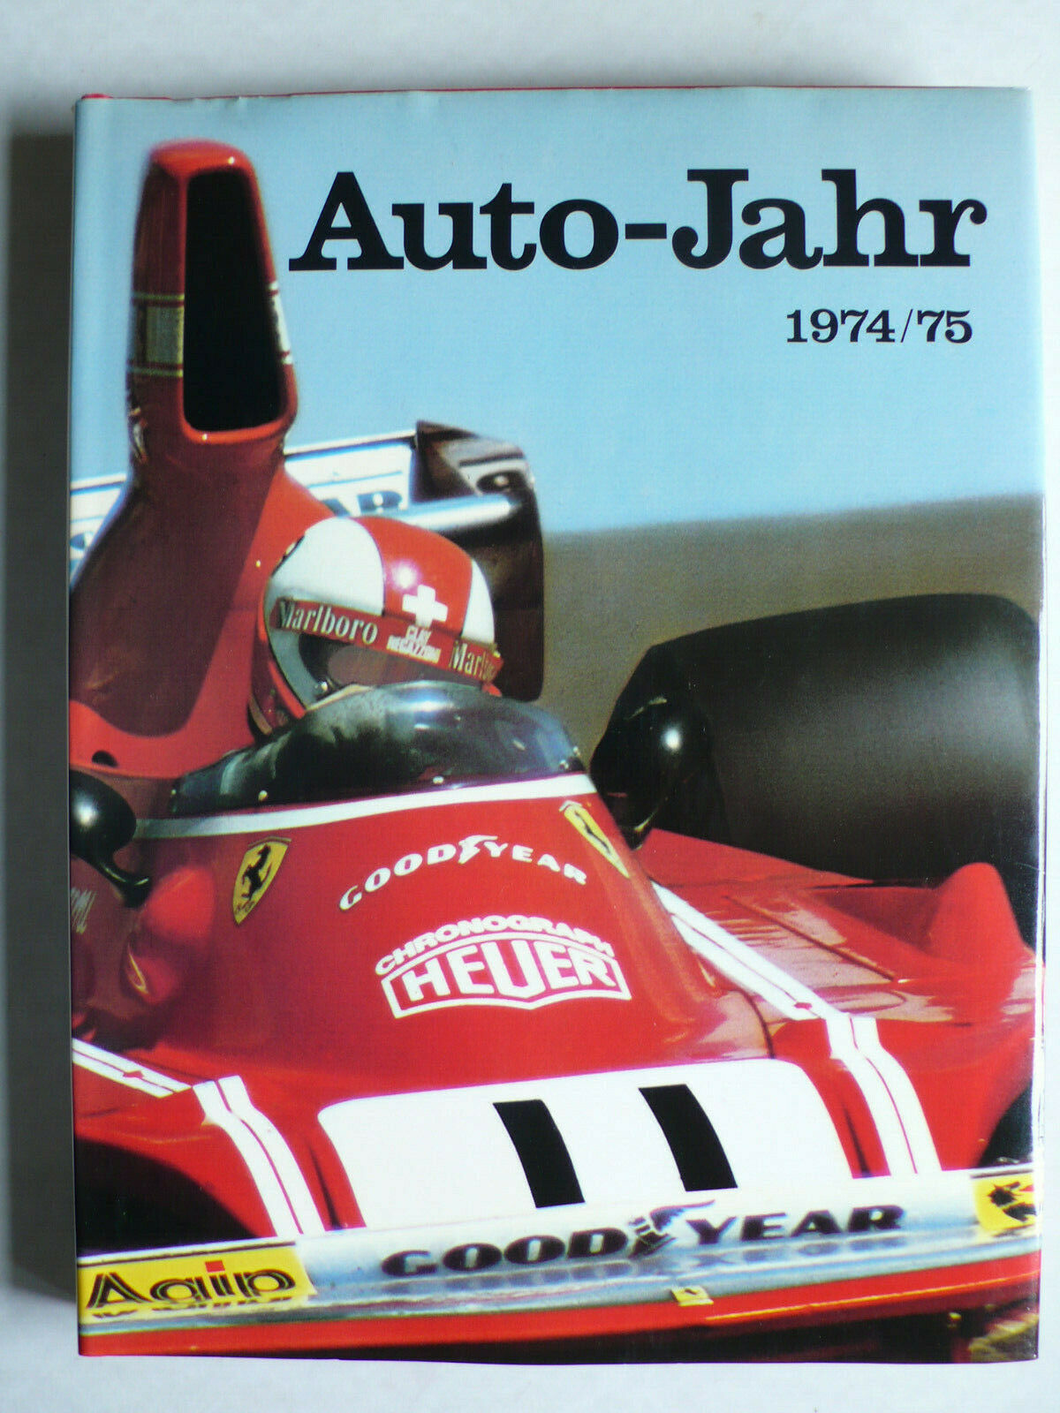 Auto - Jahr Nr. 22 / 1974 - 1975